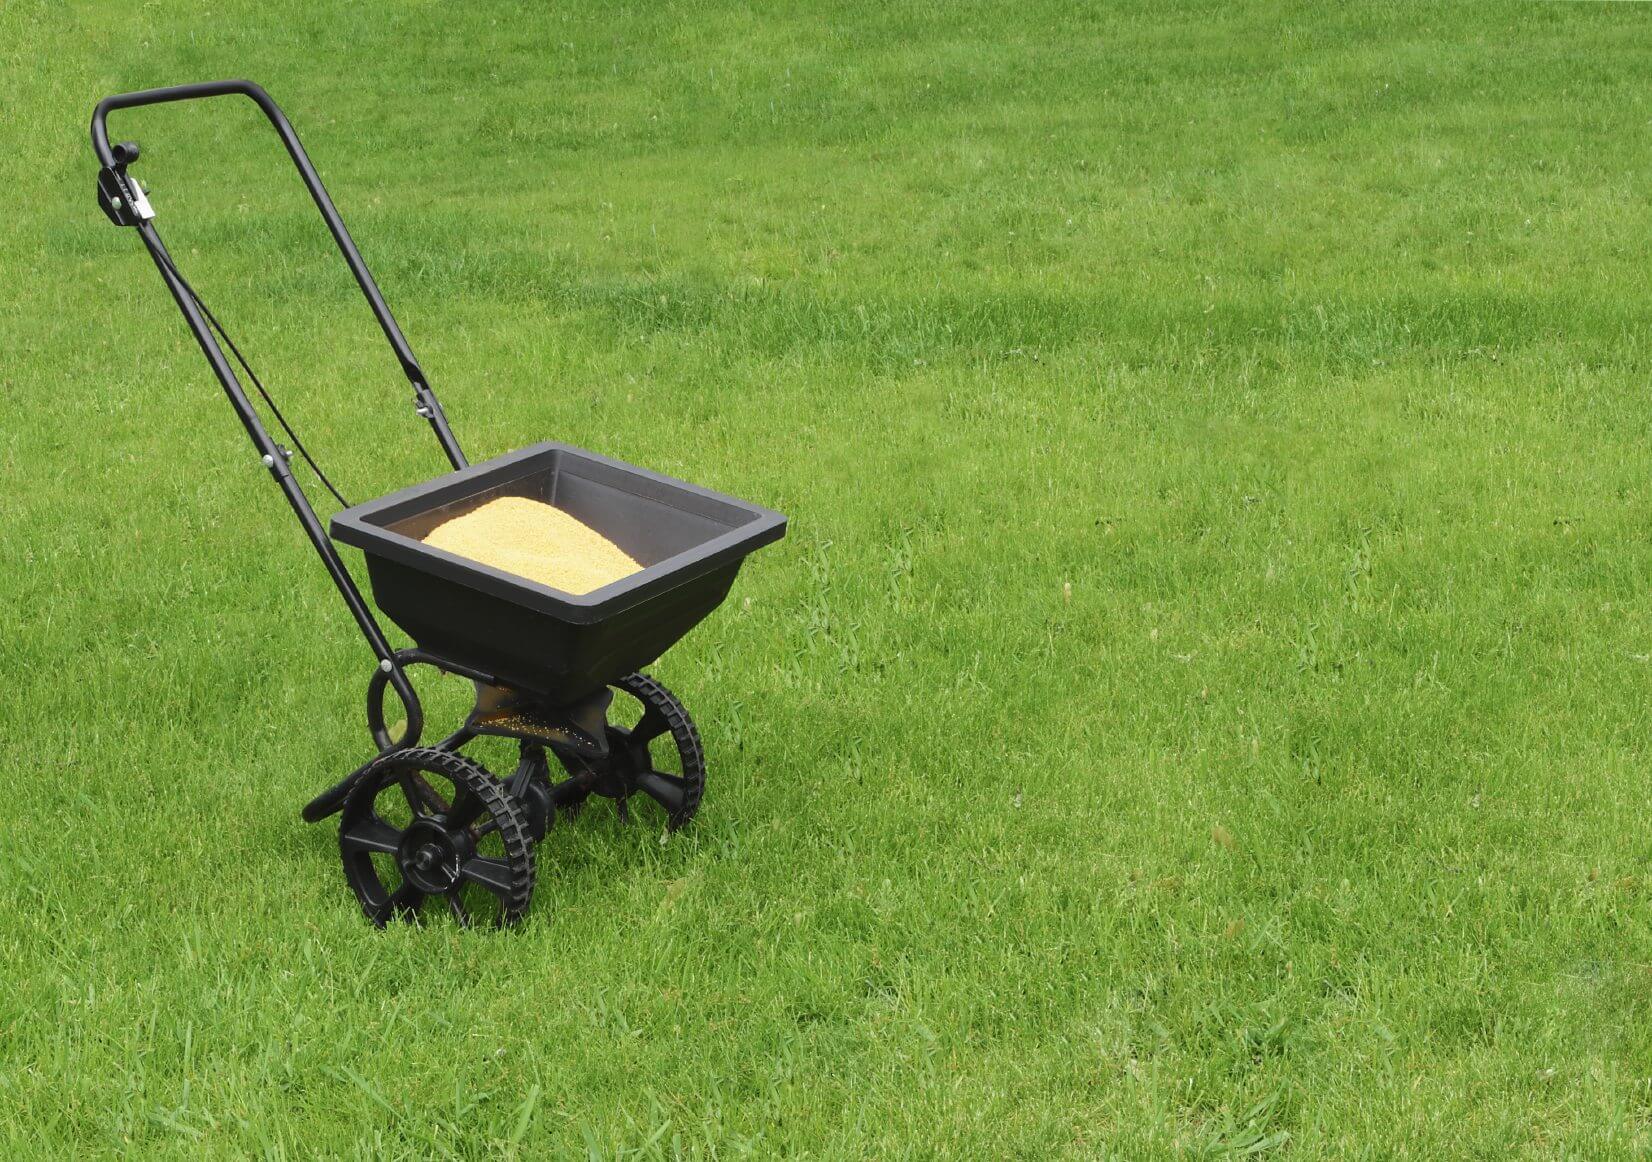 Fertilizing the lawn with a lawn fertilizer